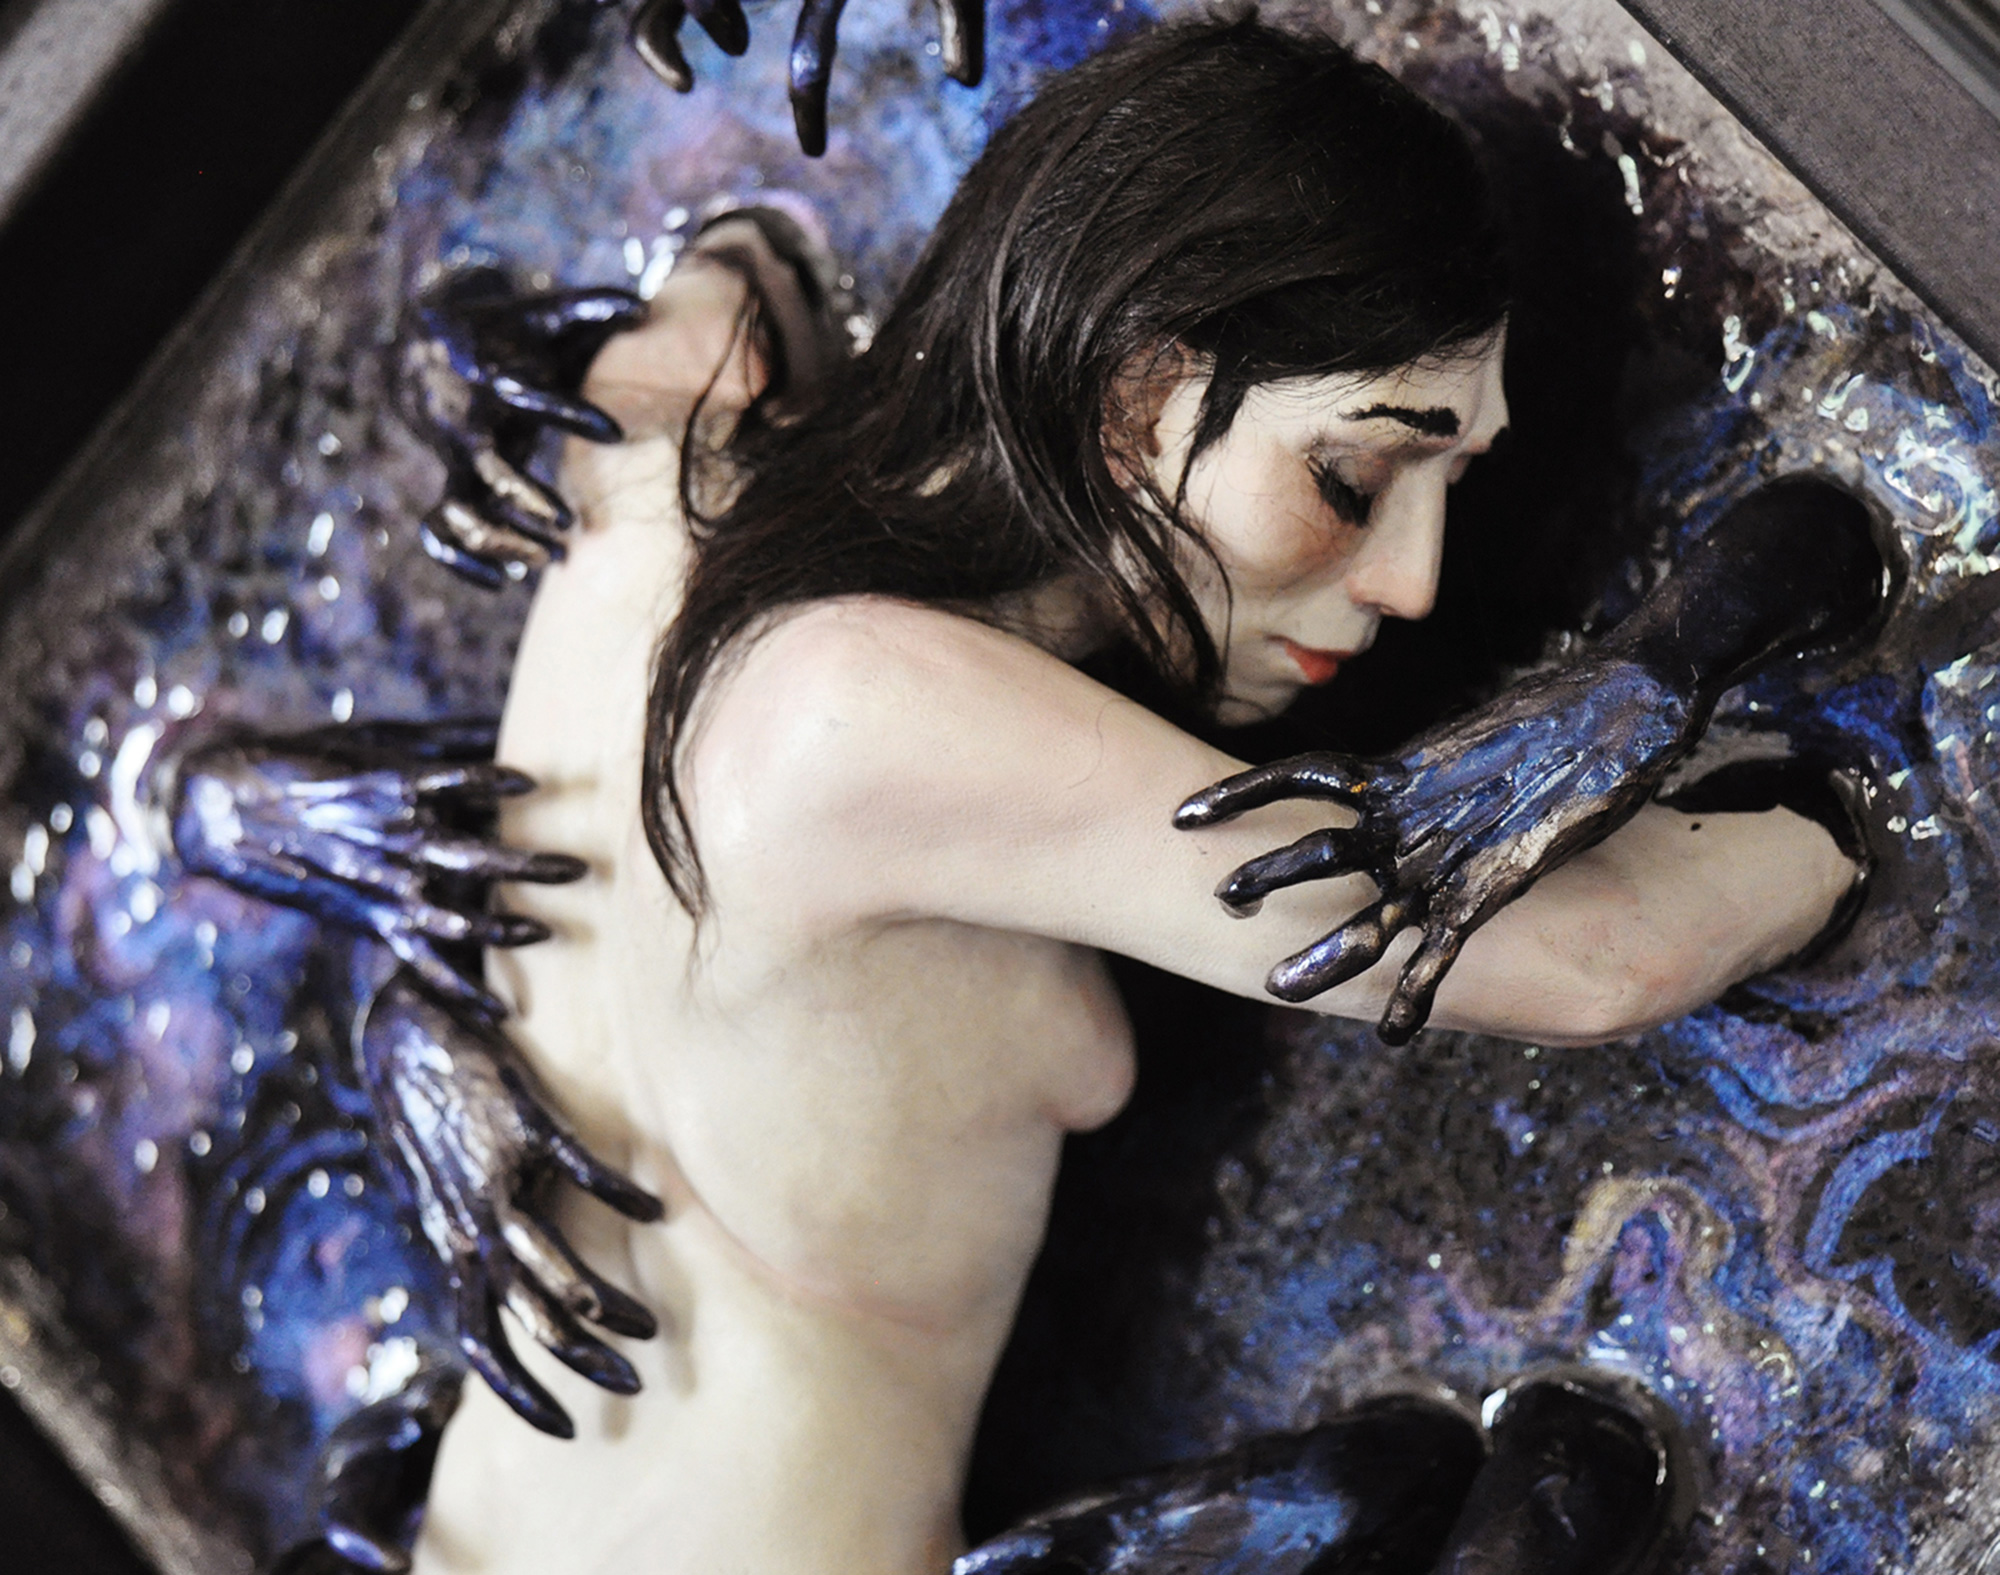 Jessica Dalva, “Abyss” (detail), cover